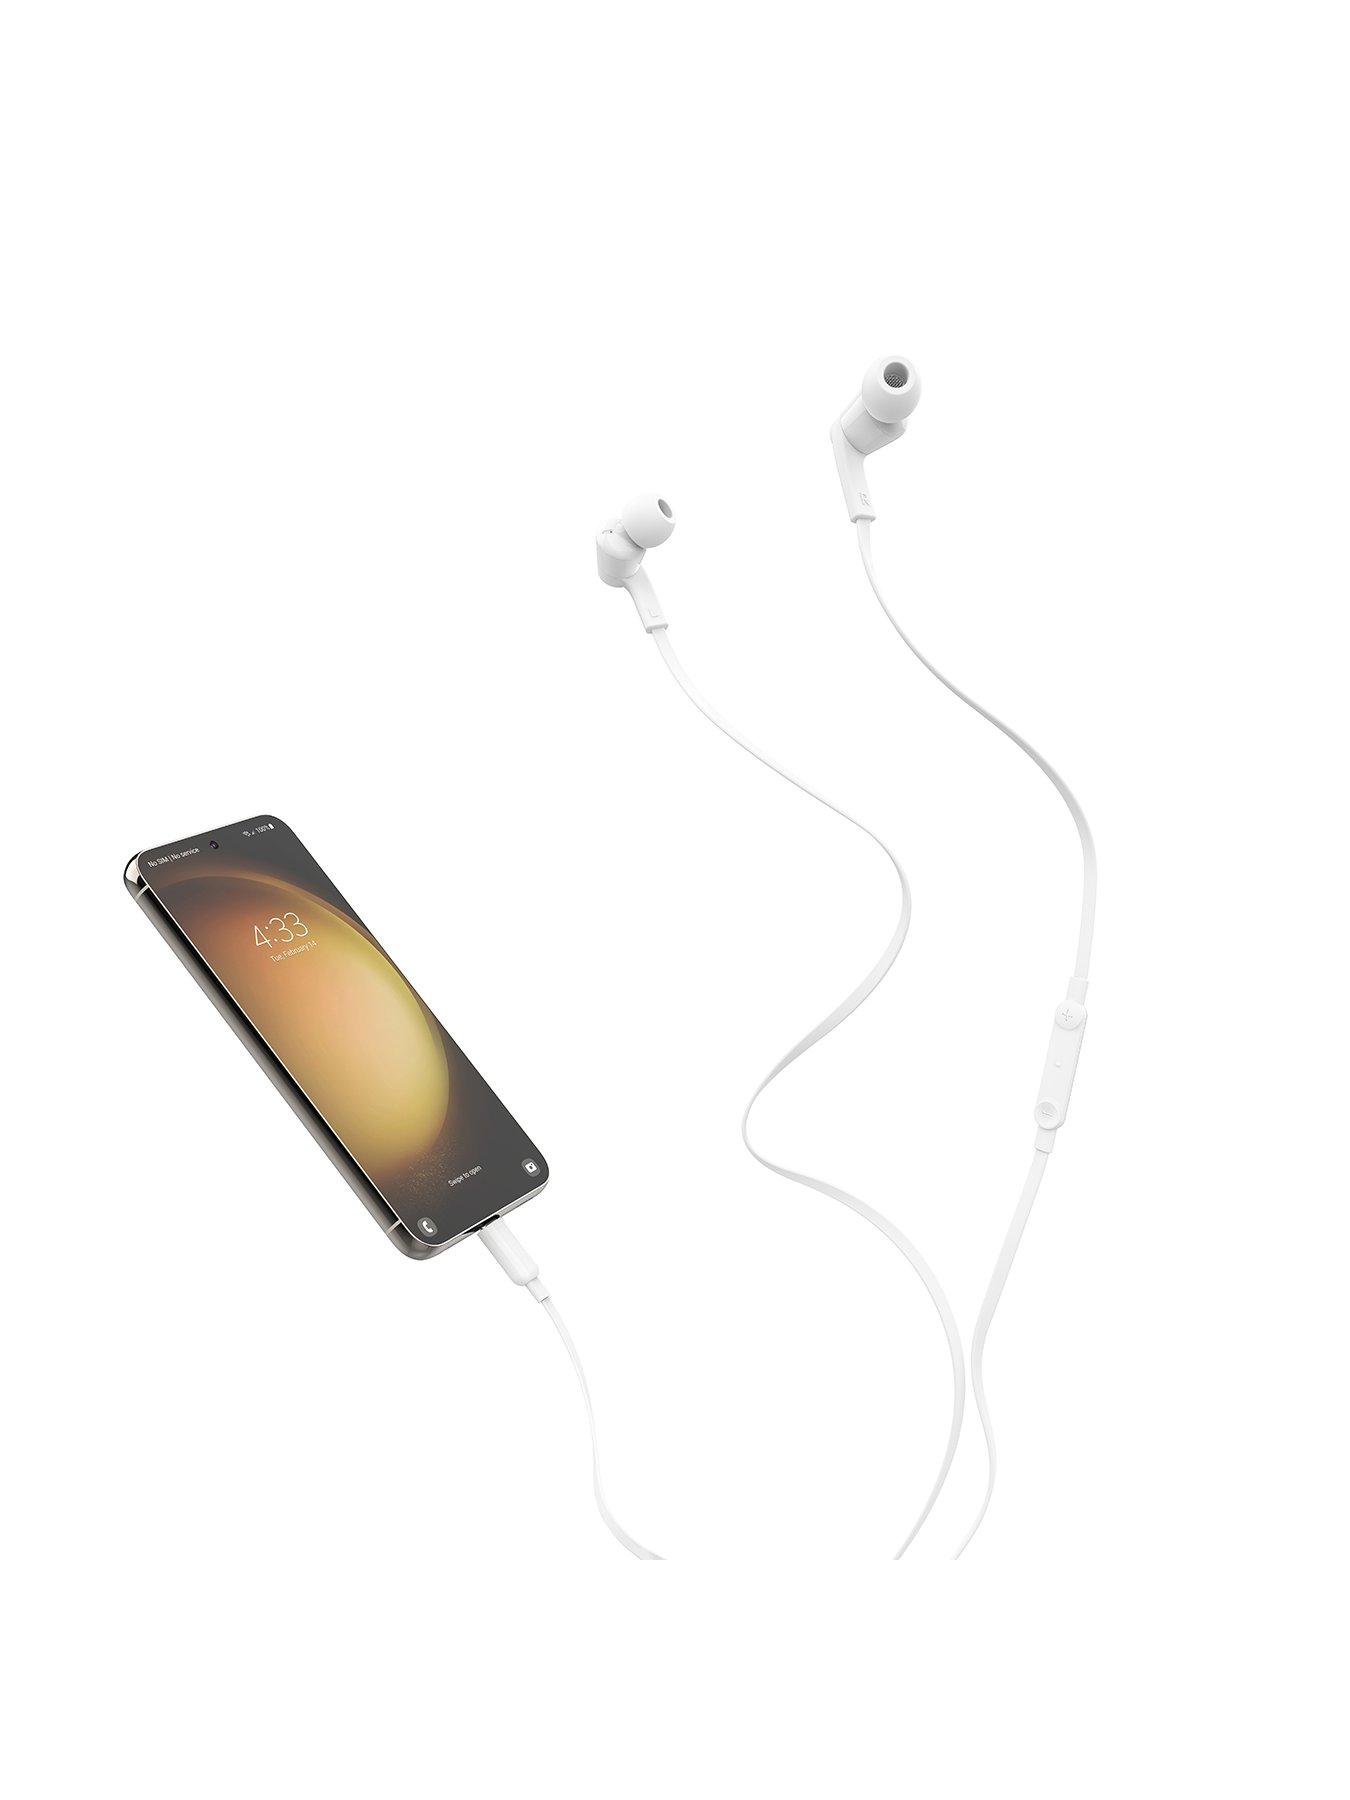 Belkin SOUNDFORM - Headphones with USB-C Connector, White